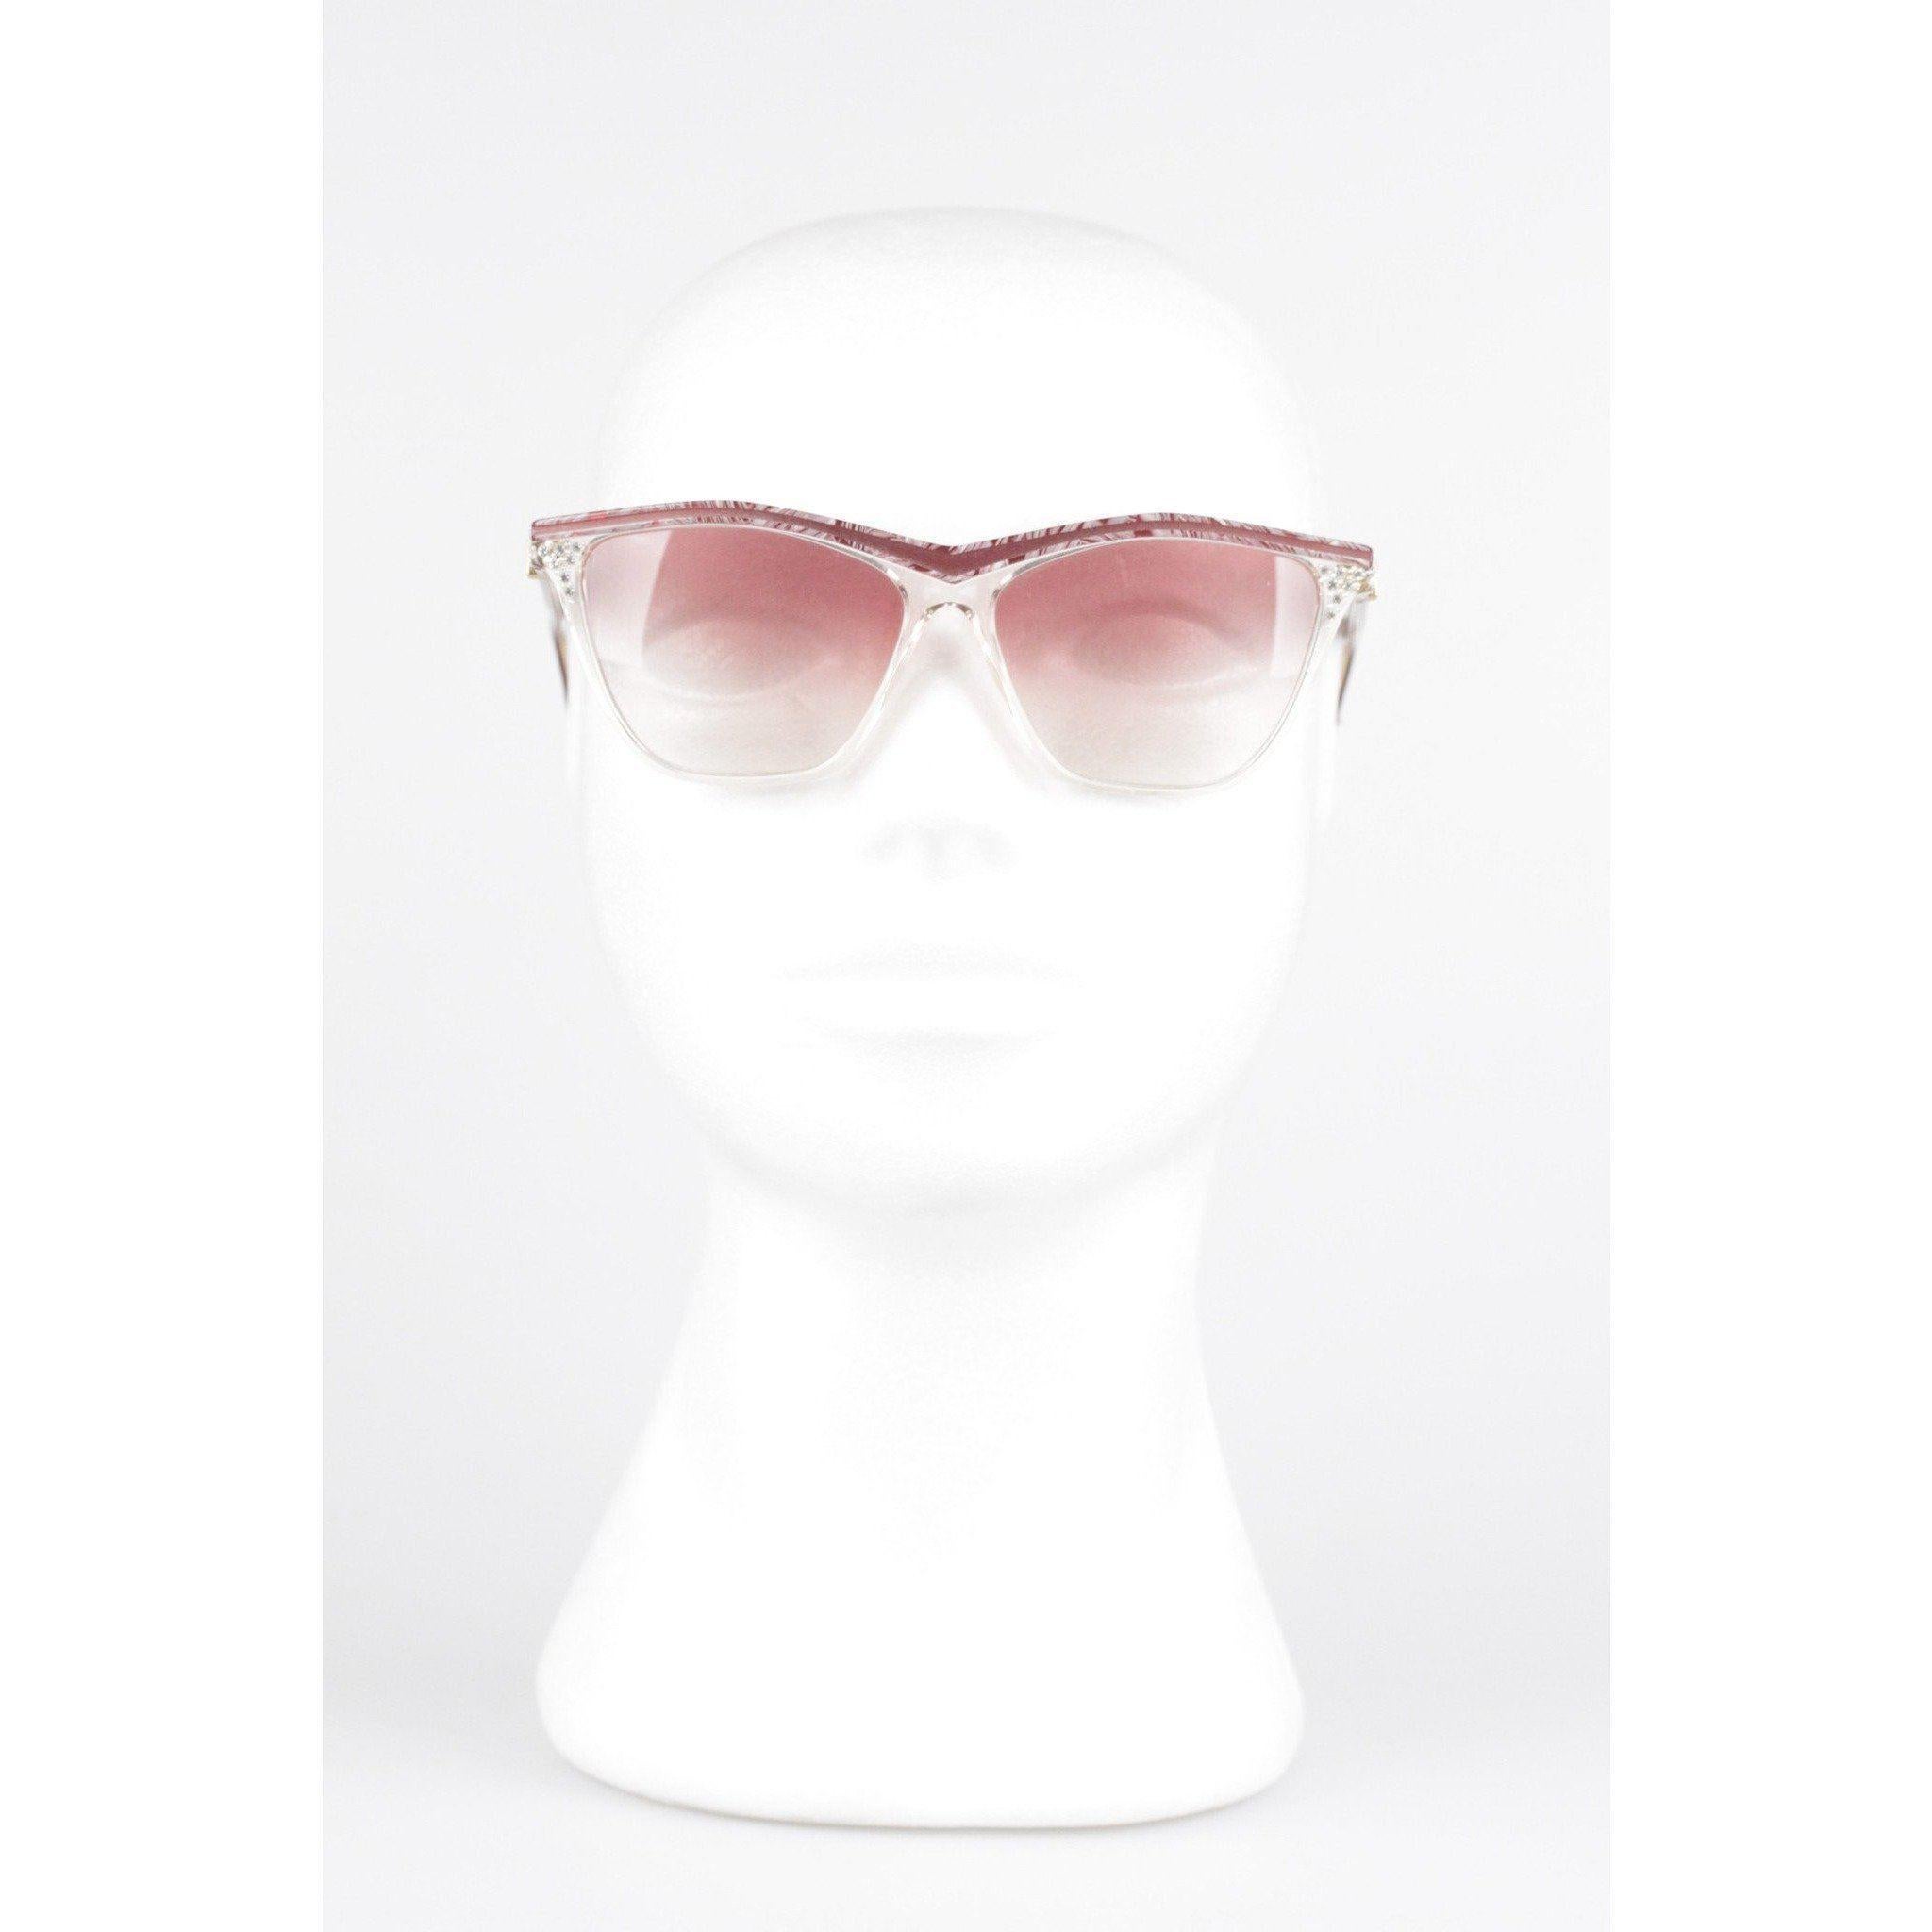 YVES SAINT LAURENT Vintage MINT Sunglasses HYRTHIOS 58mm w/Rhinestones 6